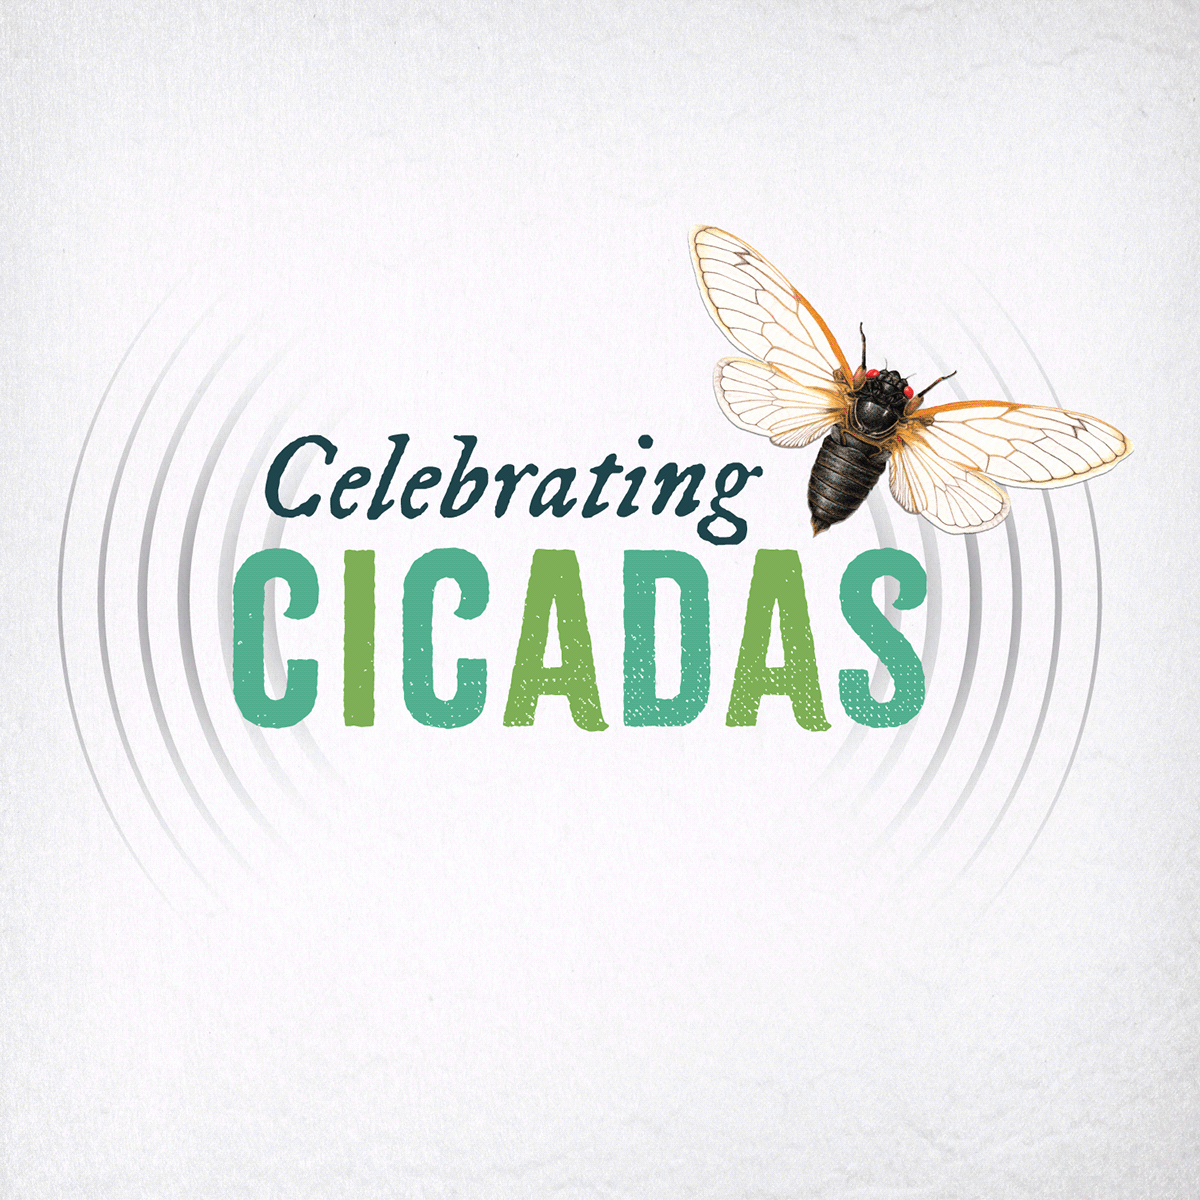 Celebrating Cicadas logo with scientific cicada illustration